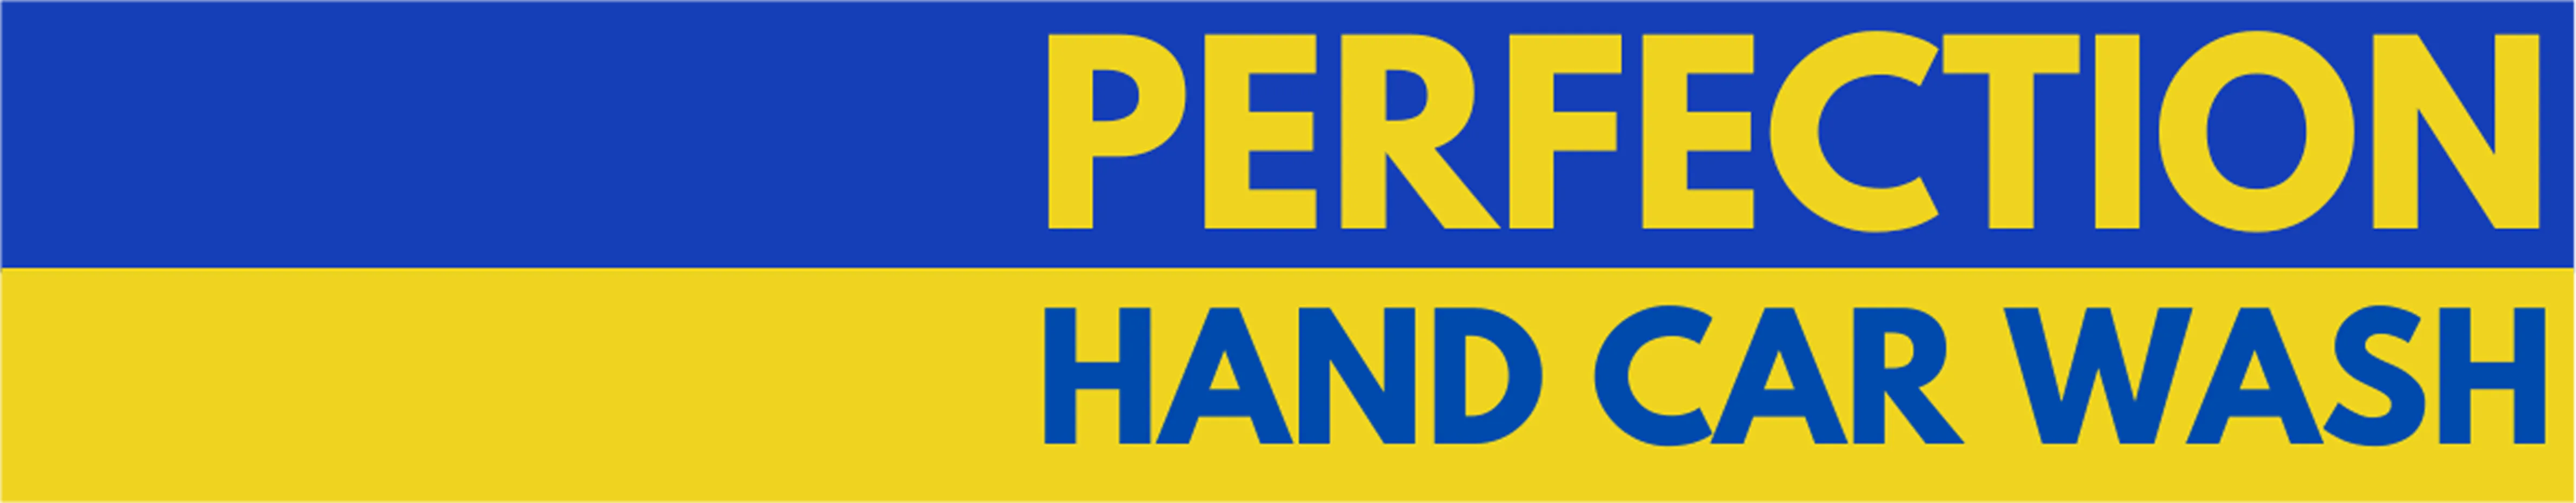 perfection hand car wash logo